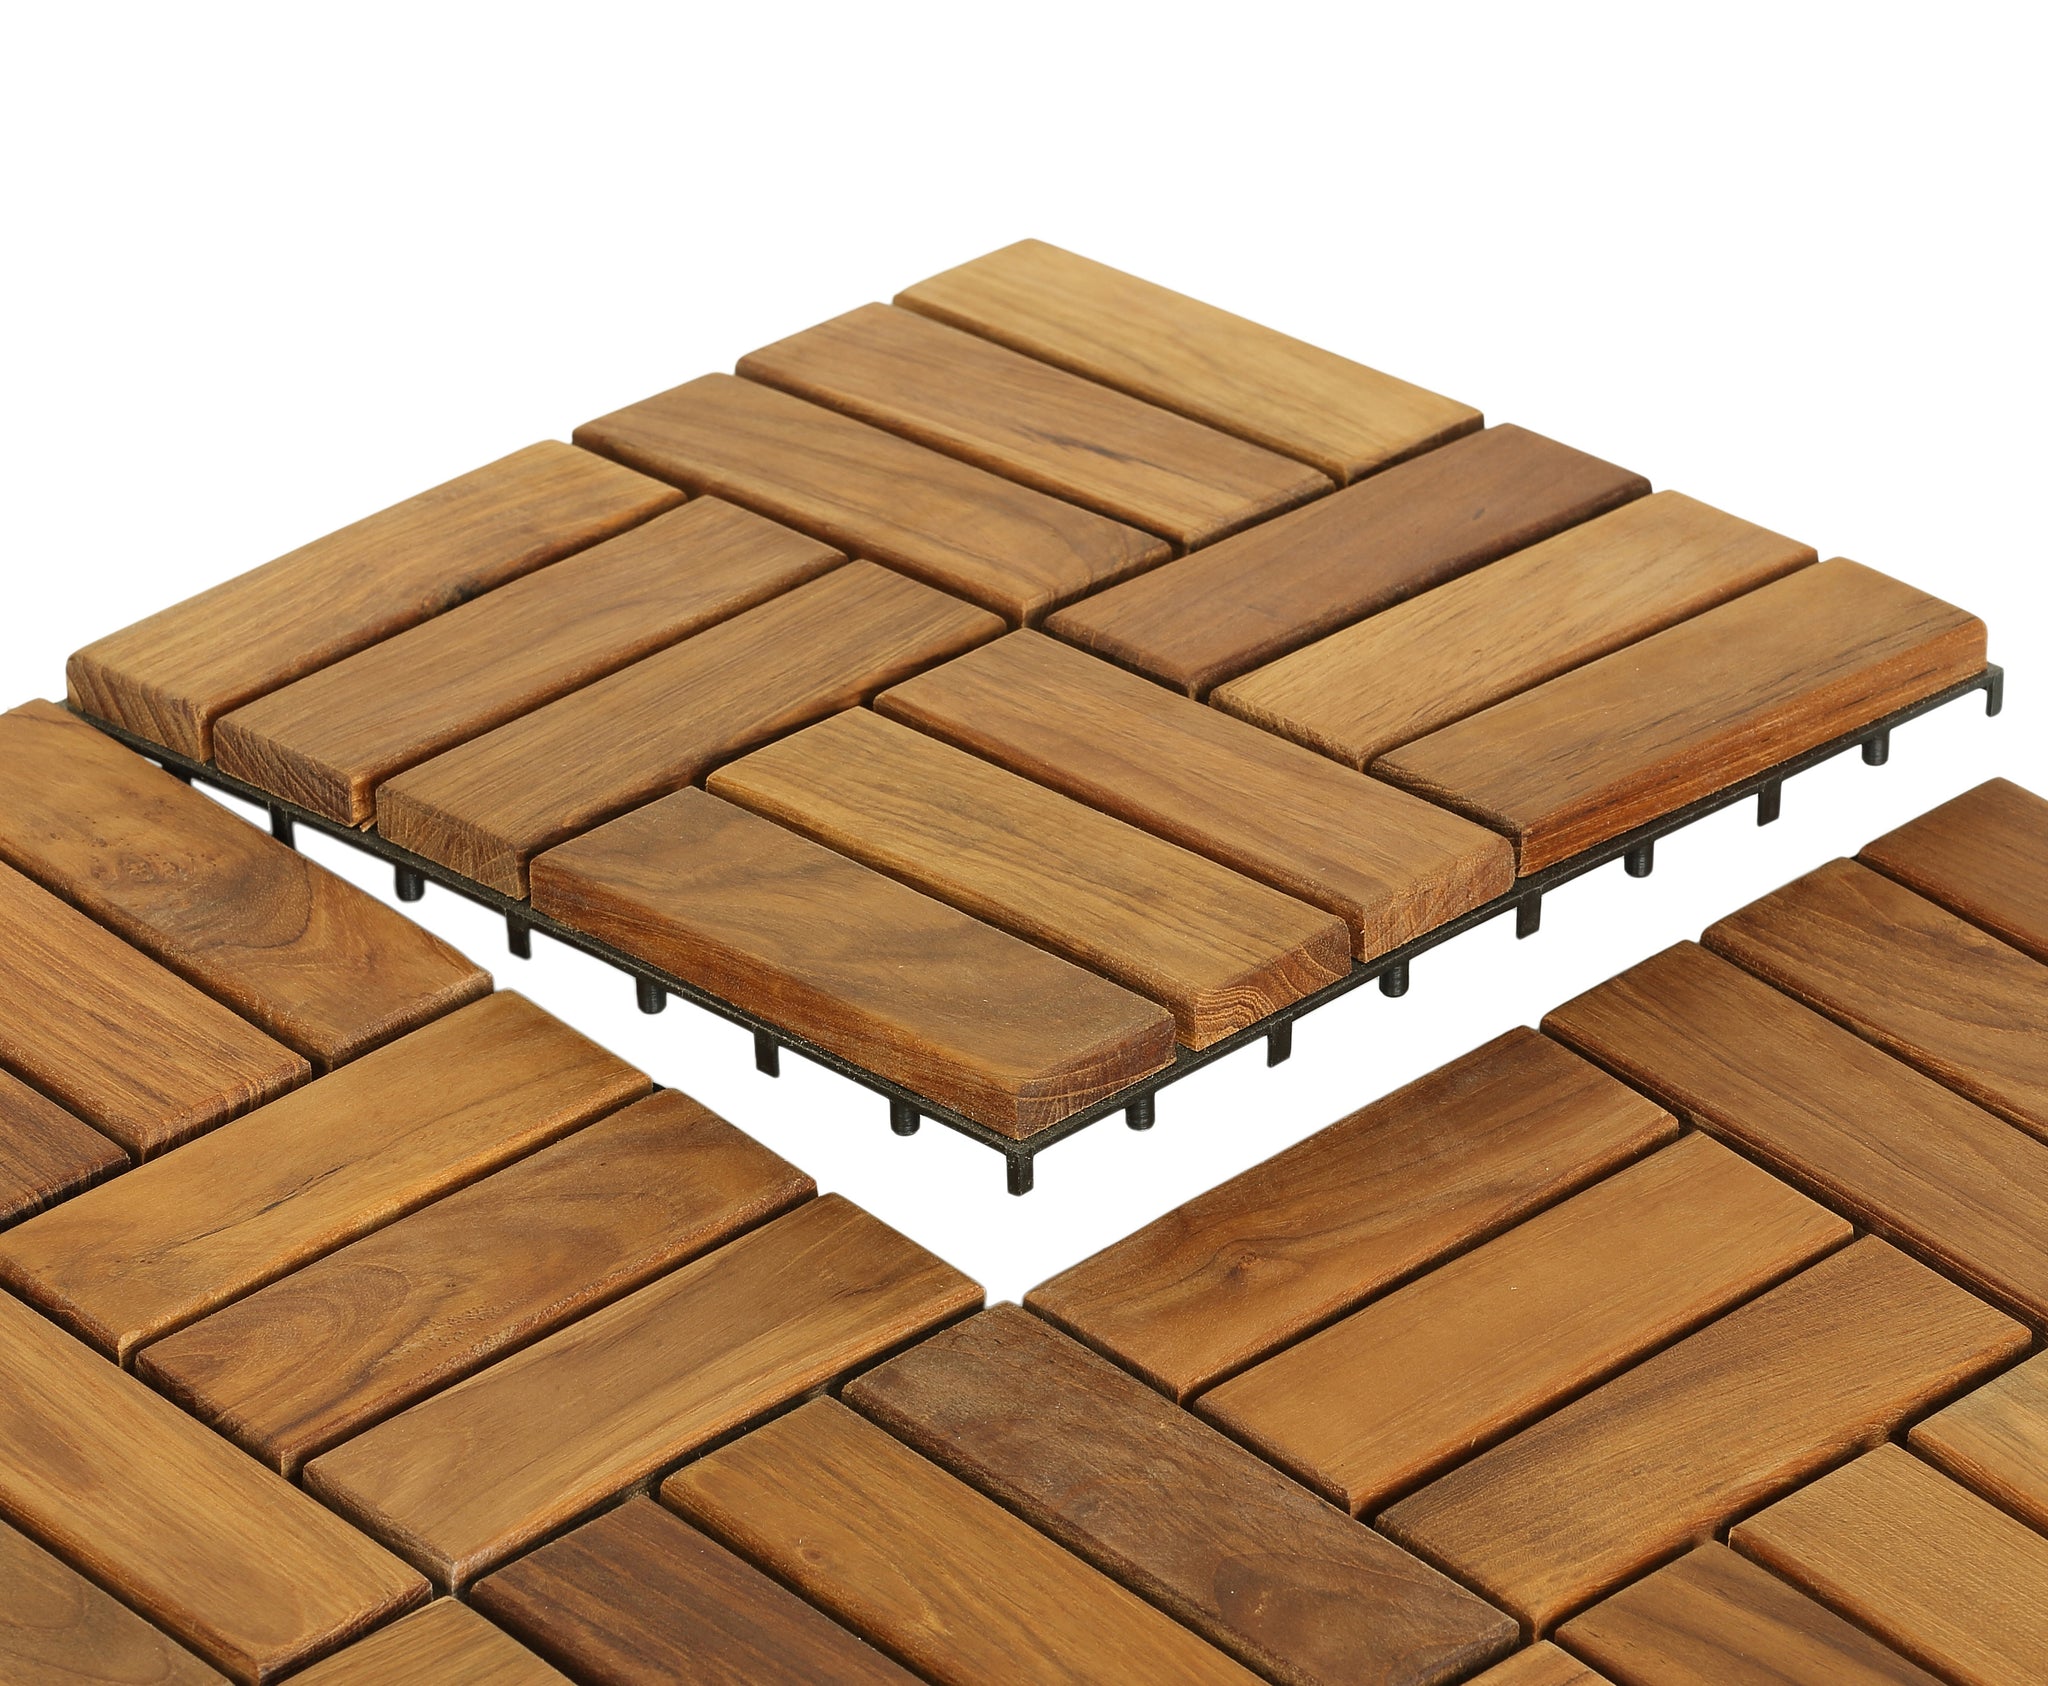 Bare Decor EZ-Floor in Solid Teak Wood, 1 TILE ONLY, Parquet